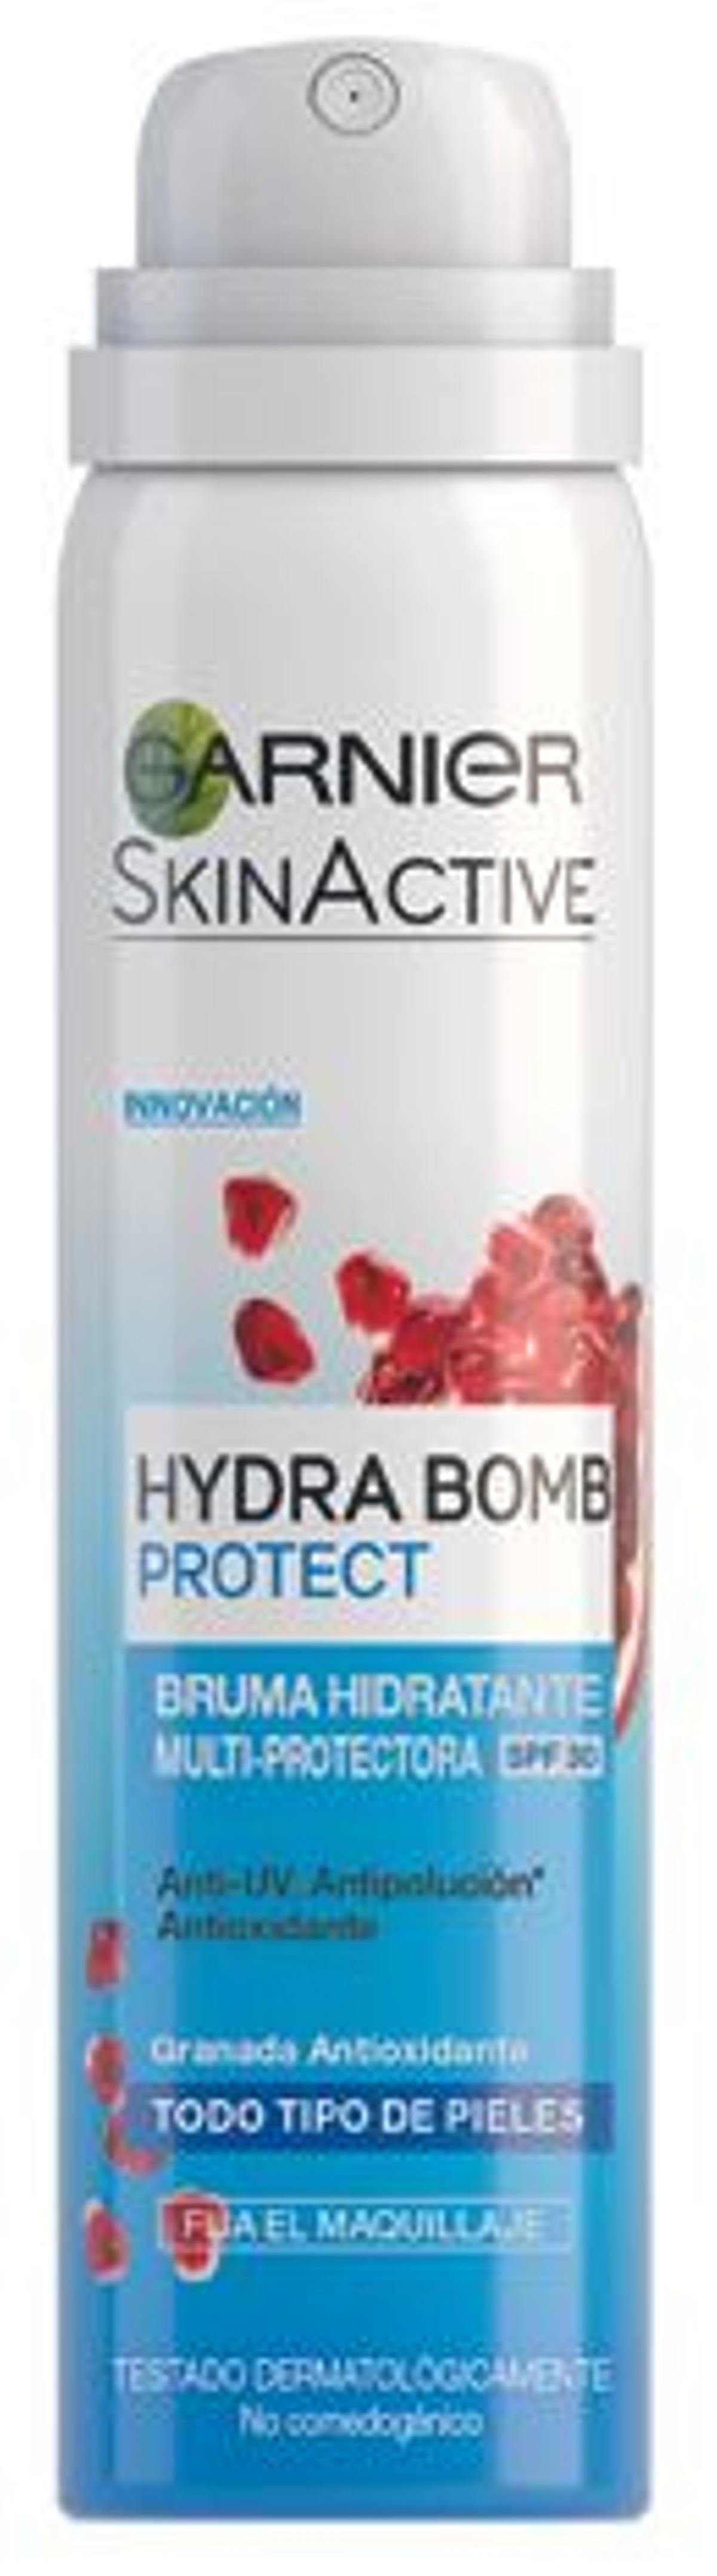 GARNIER. Bruma hidratante multiprotectora 'Hydra Bomb Protect' (50 ml).